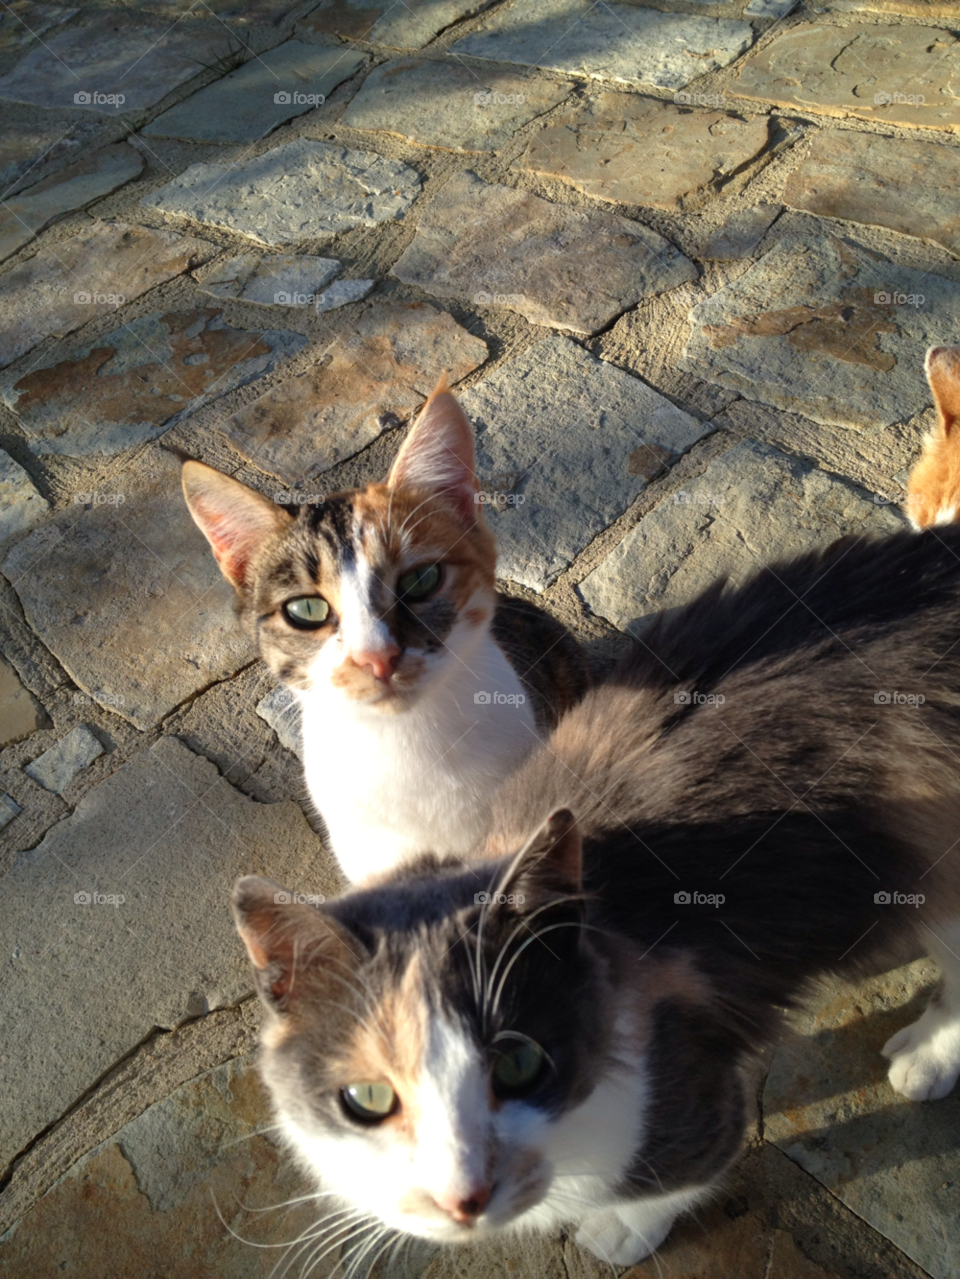 cats stone cyprus kittens by gkallis23